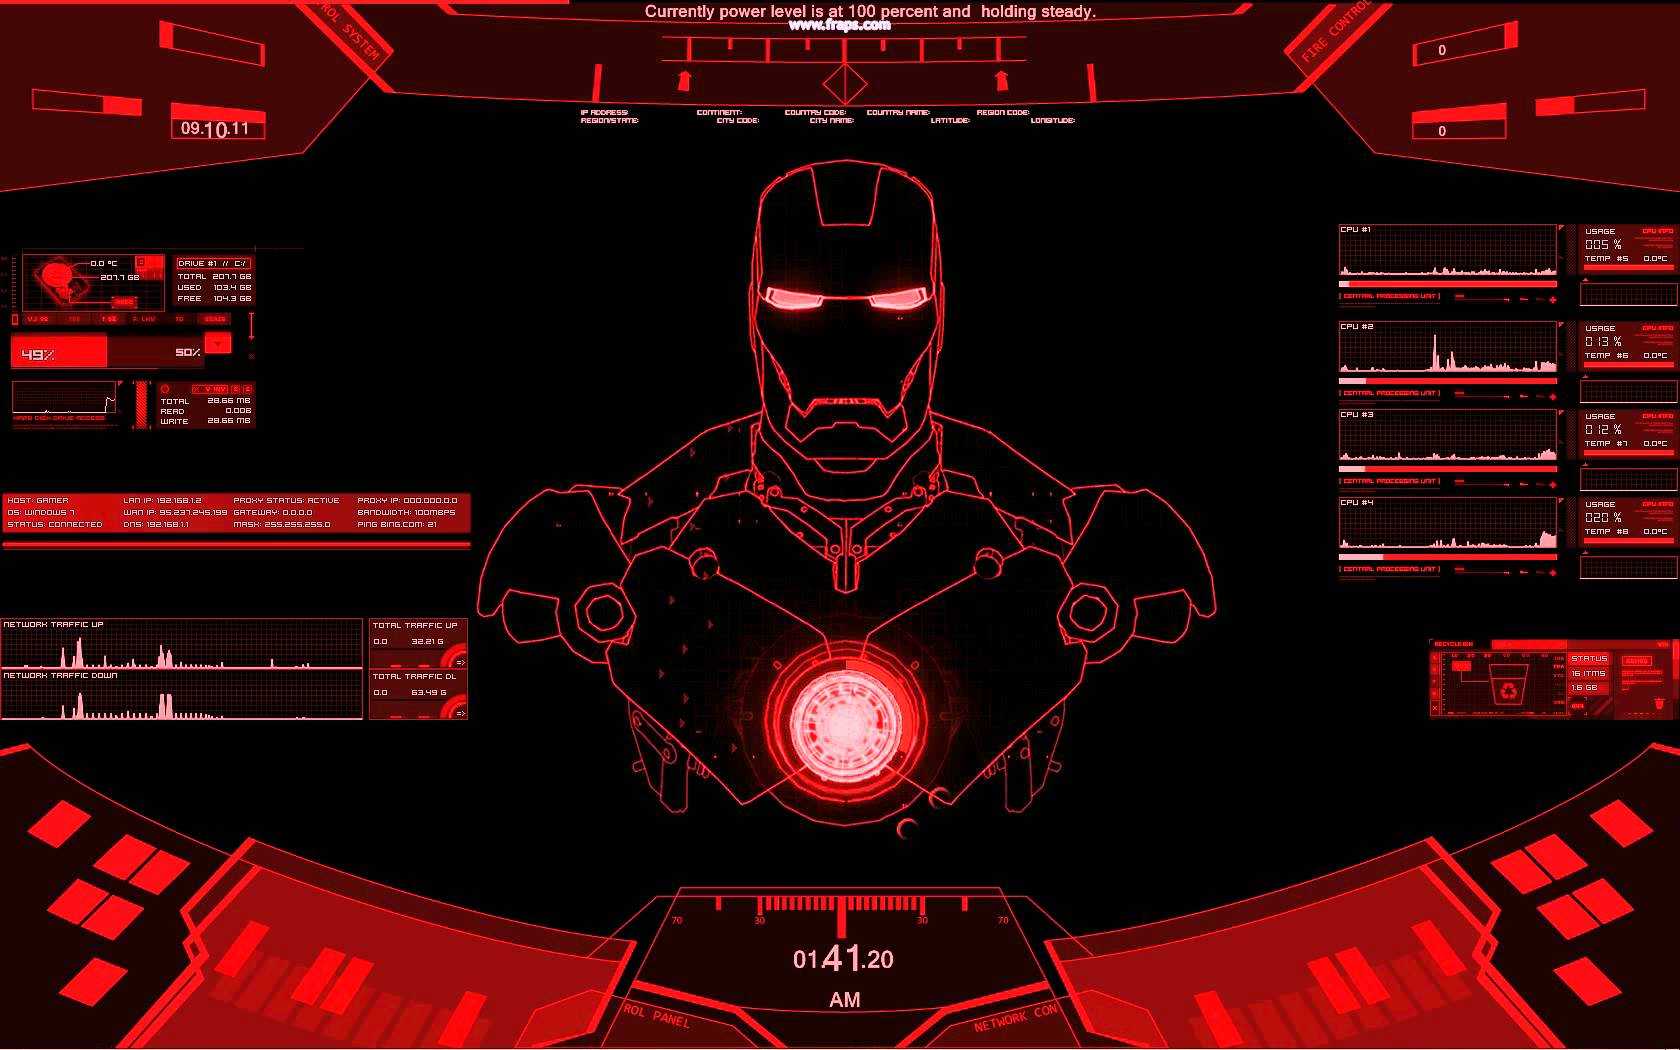 Iron Man Jarvis Animated Wallpaper